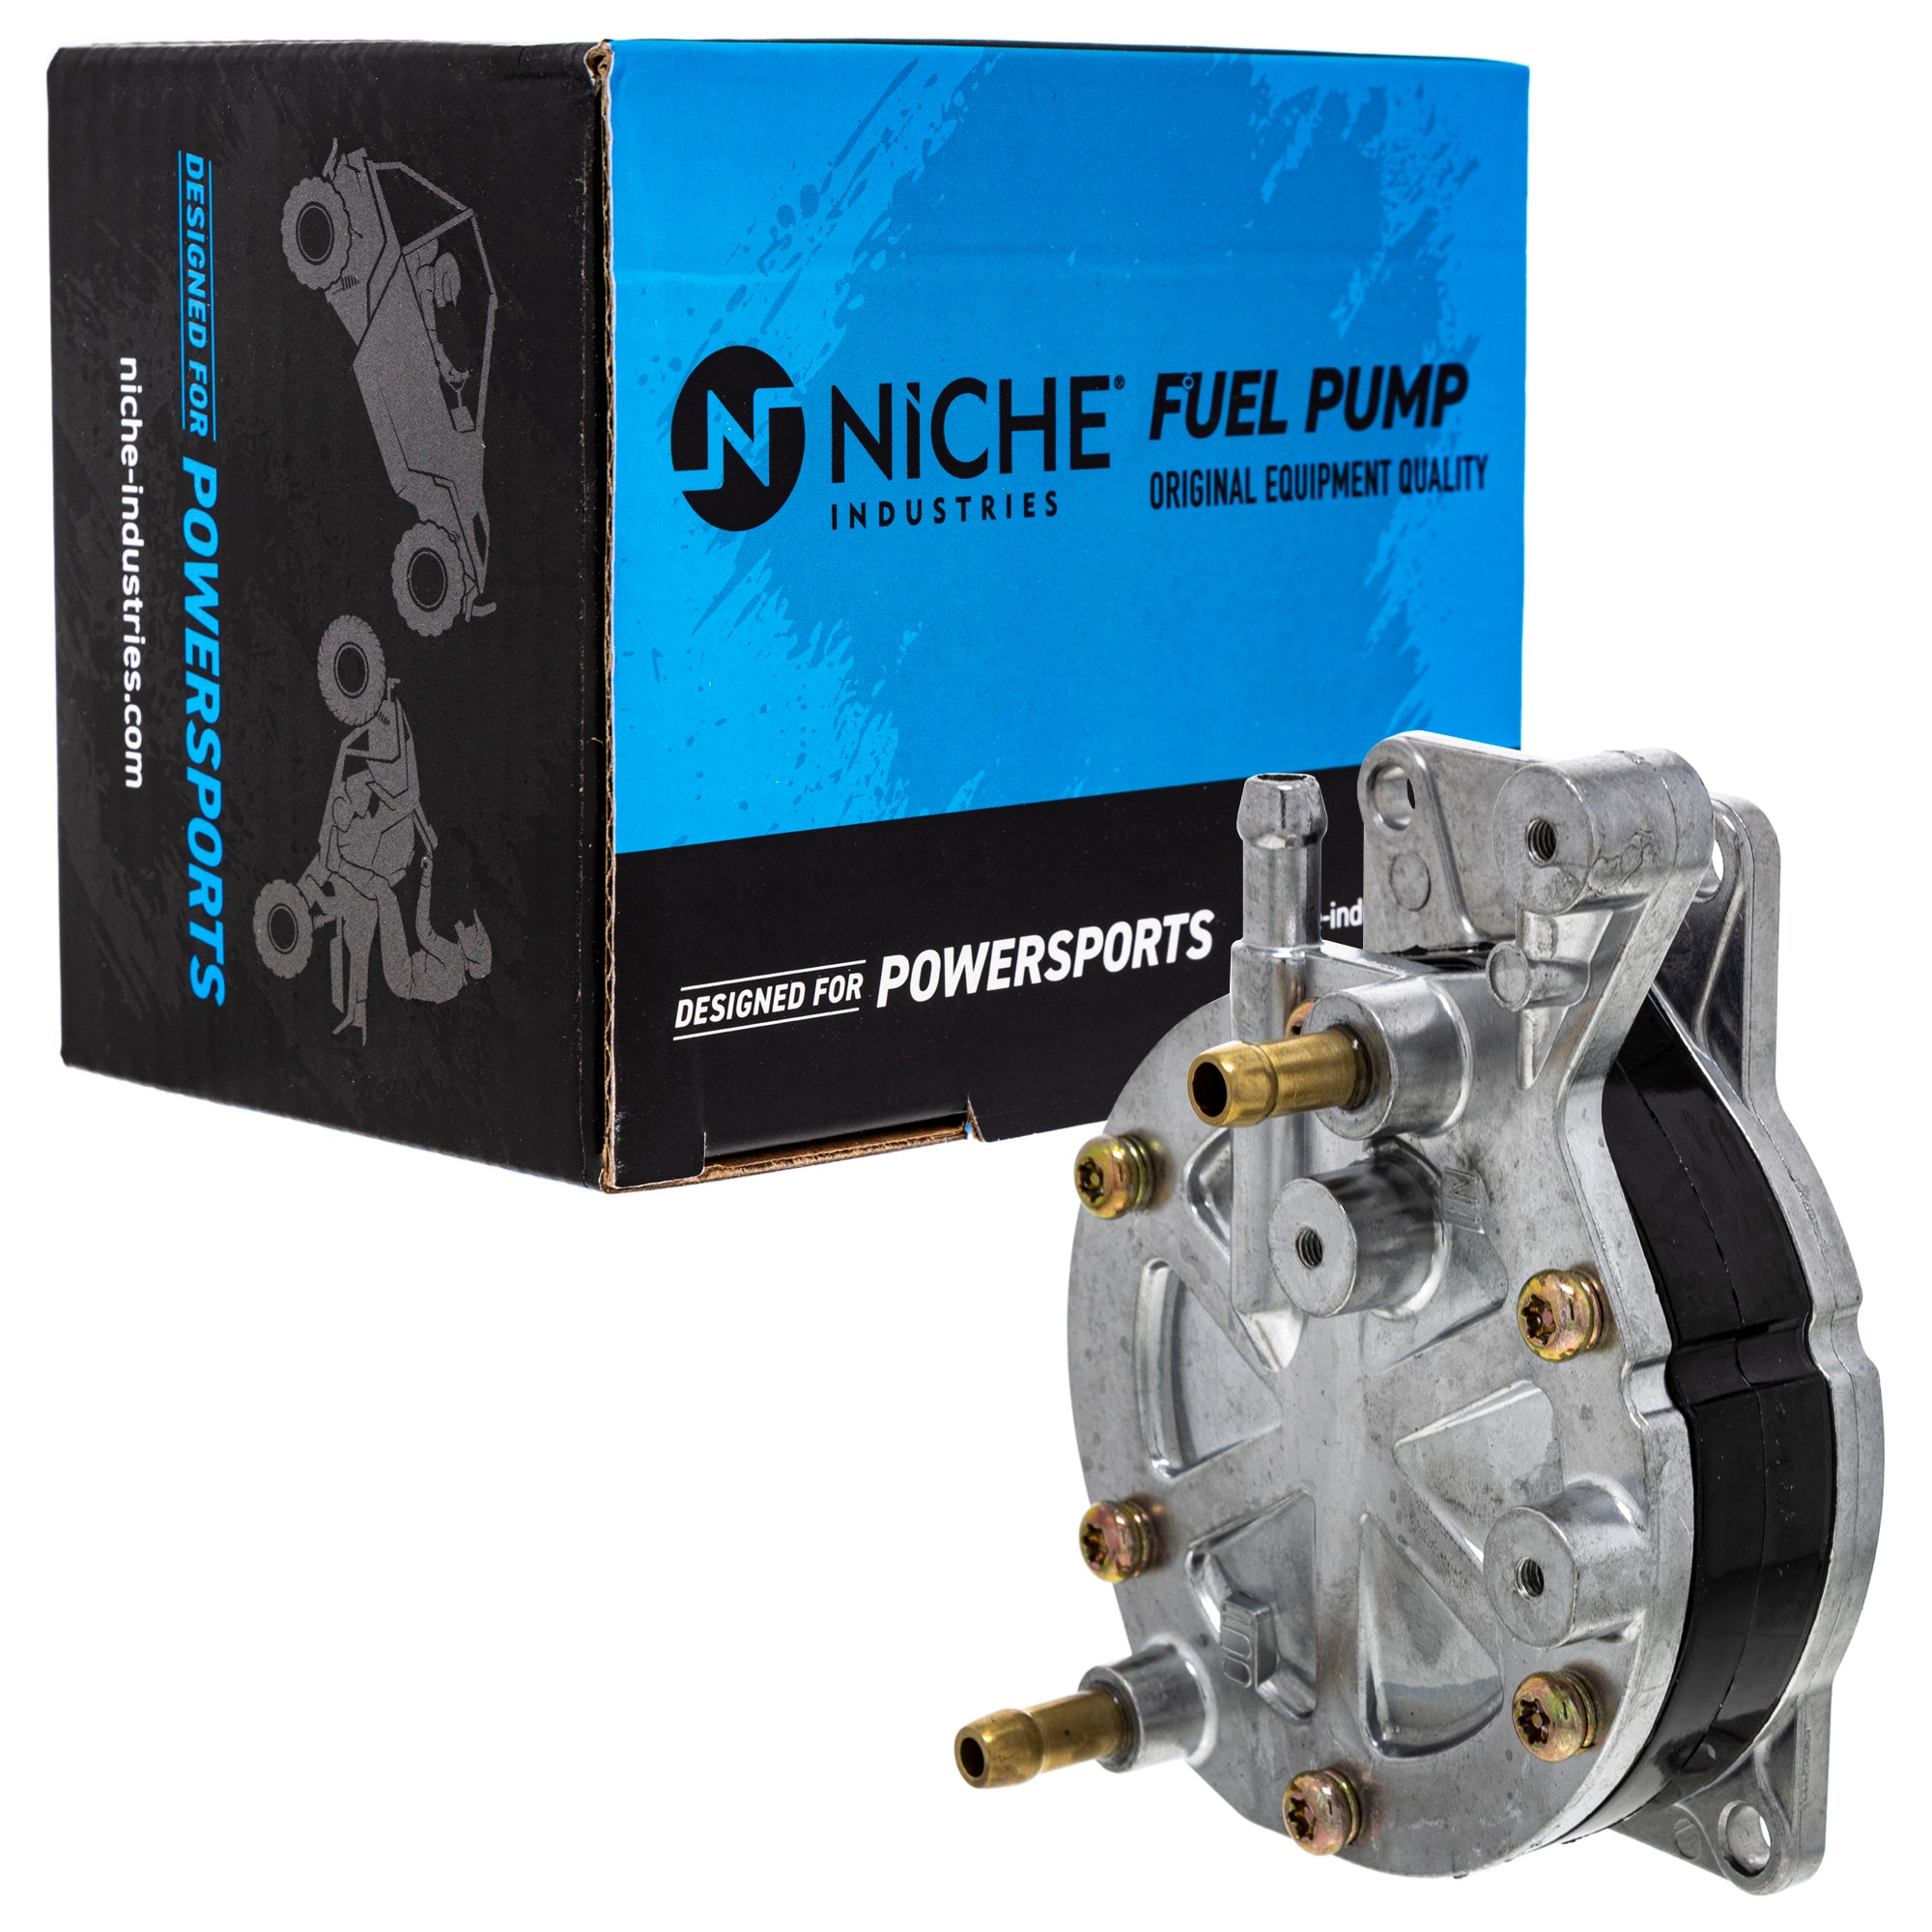 Fuel Pump Kit for zOTHER Jet NICHE 519-CFP2232A